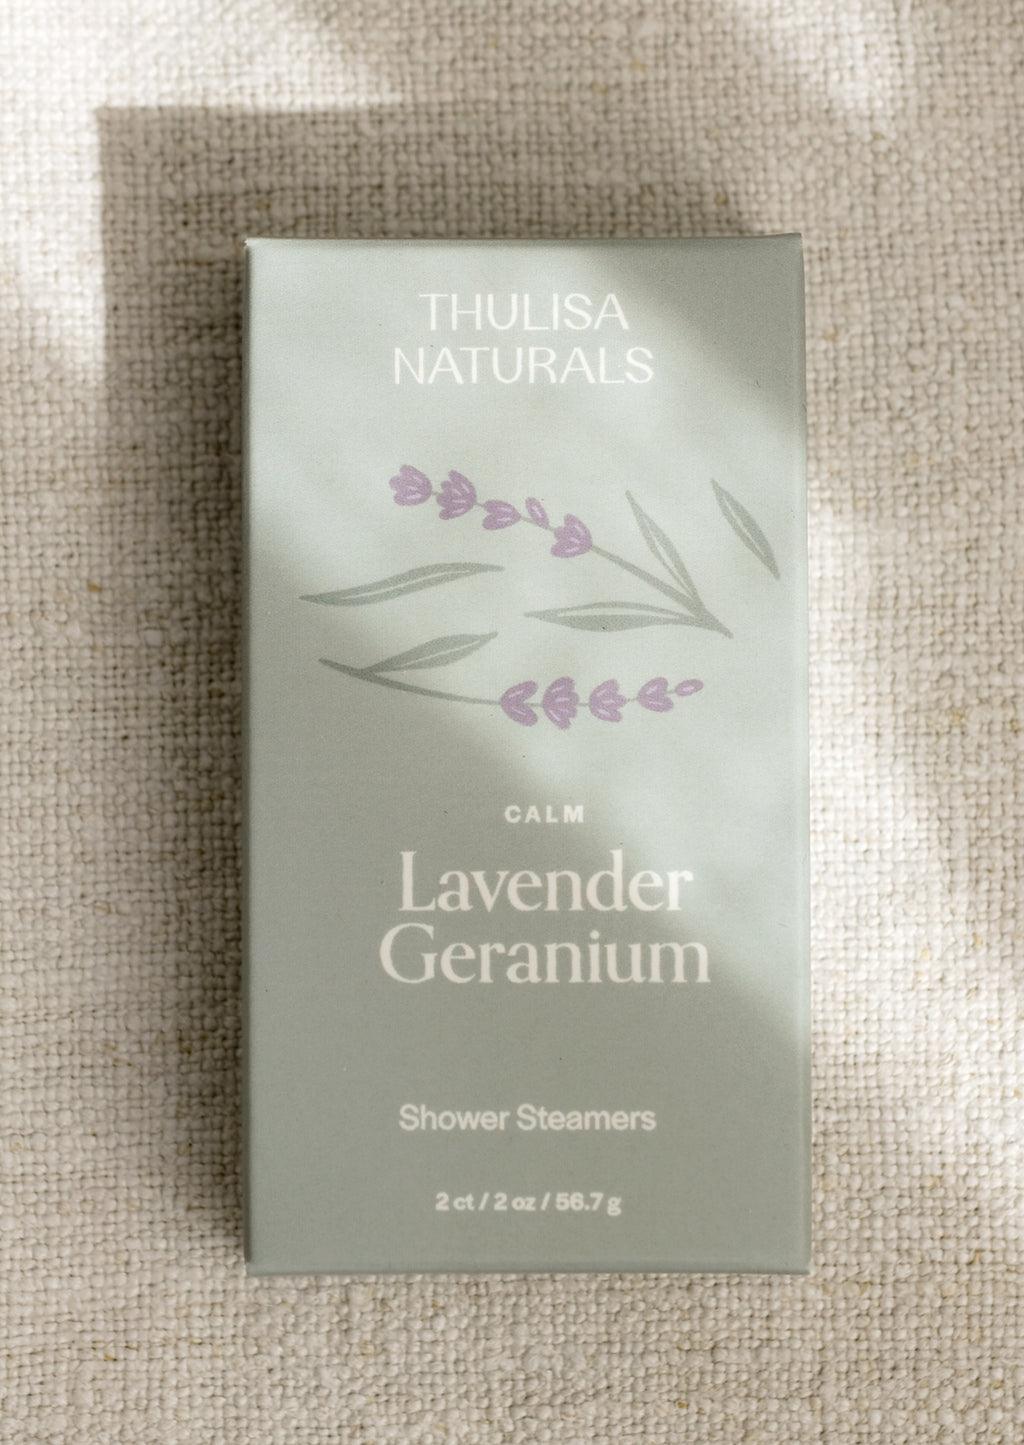 Lavender Geranium: A 2 pack of shower steamers in lavender geranium "calm" scent.